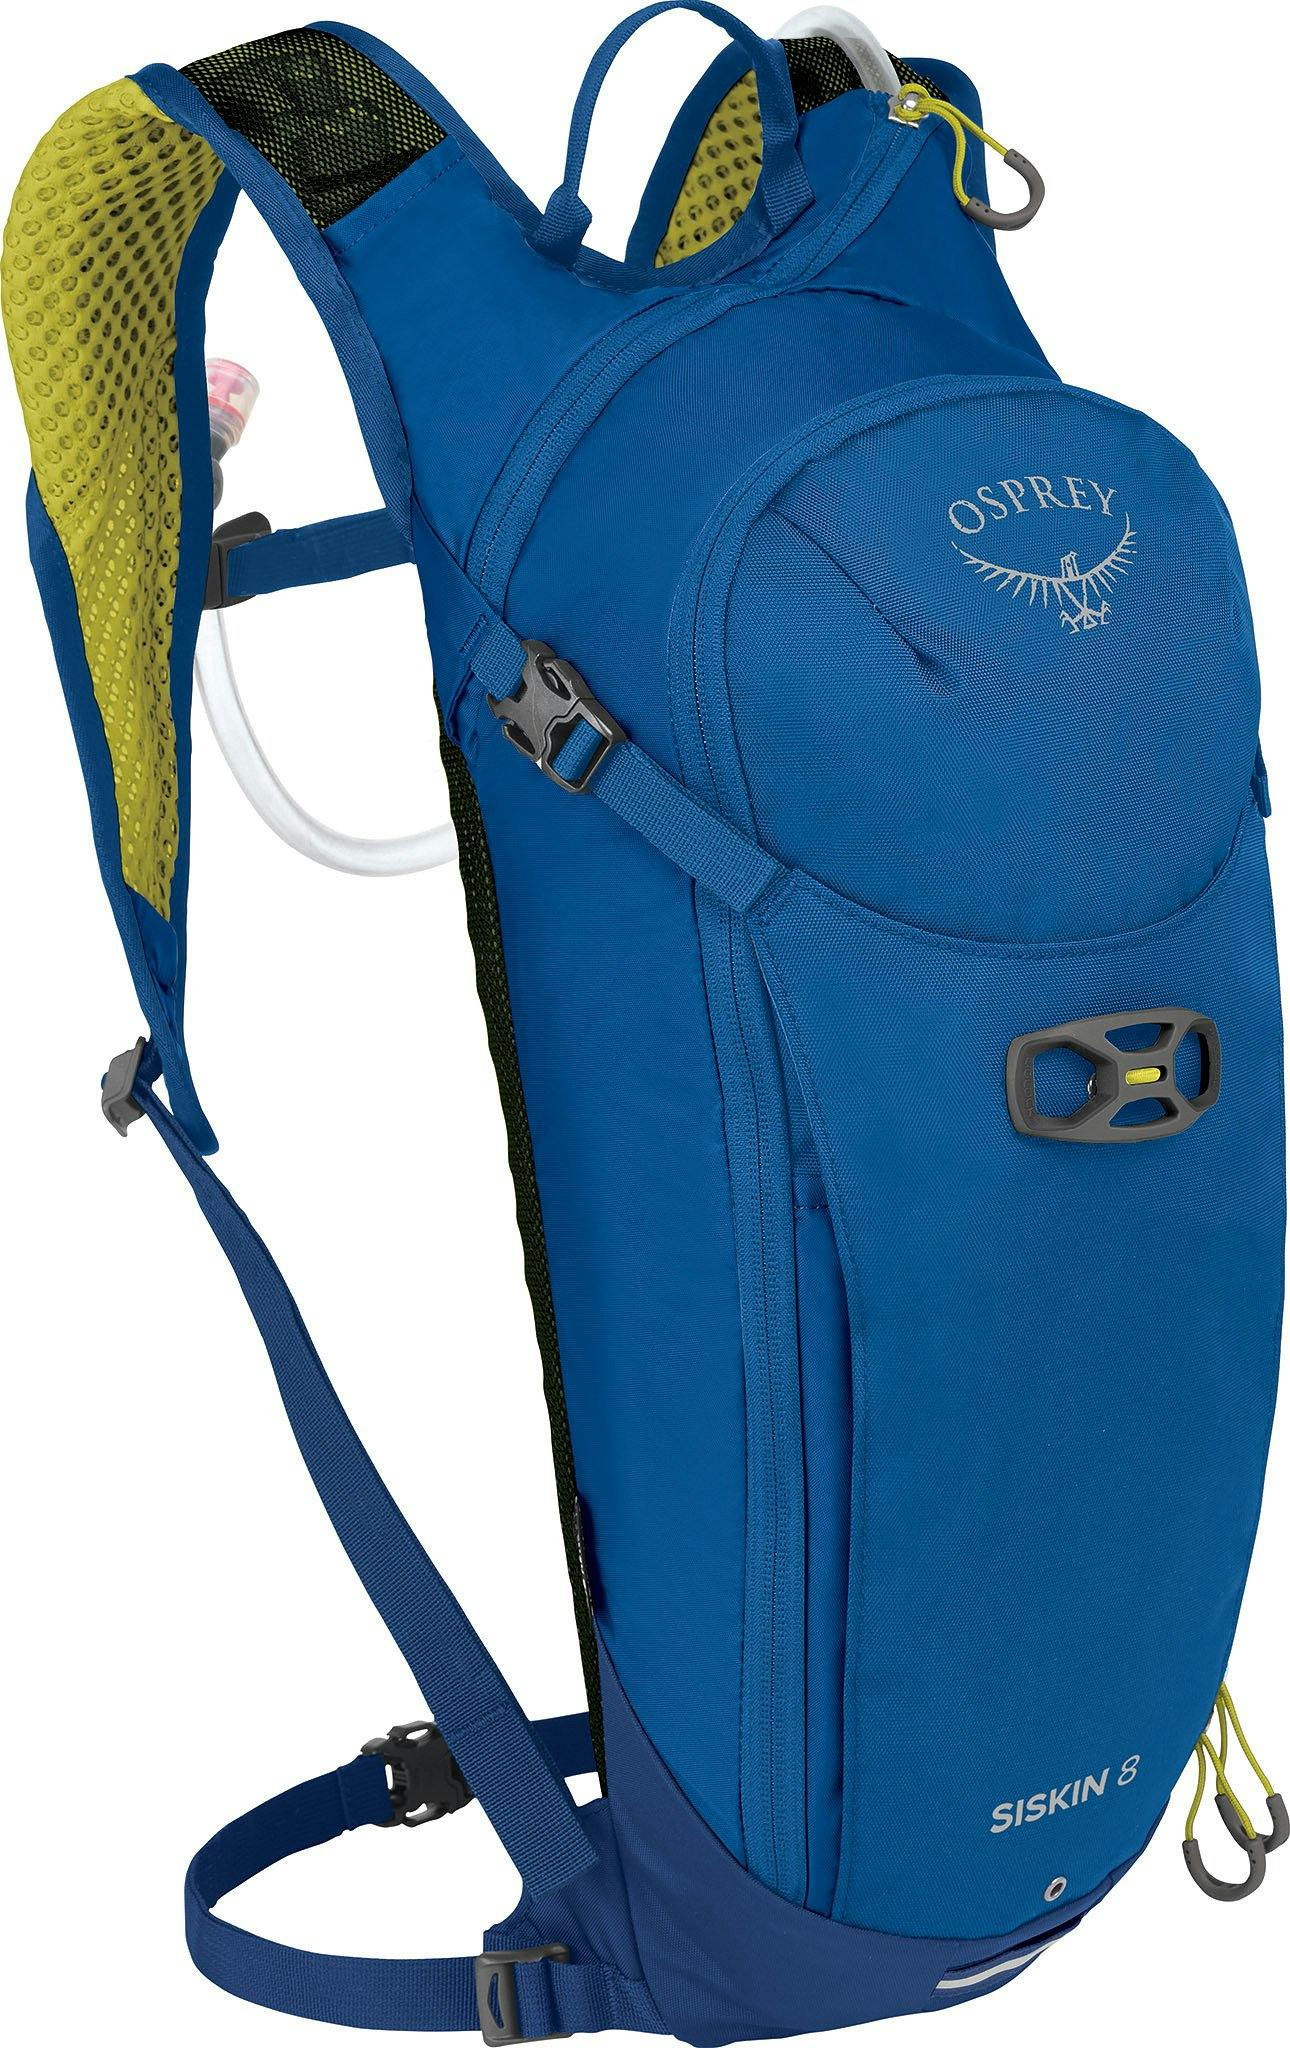 Product image for Siskin Bike Backpack with Reservoir 8L - Men's